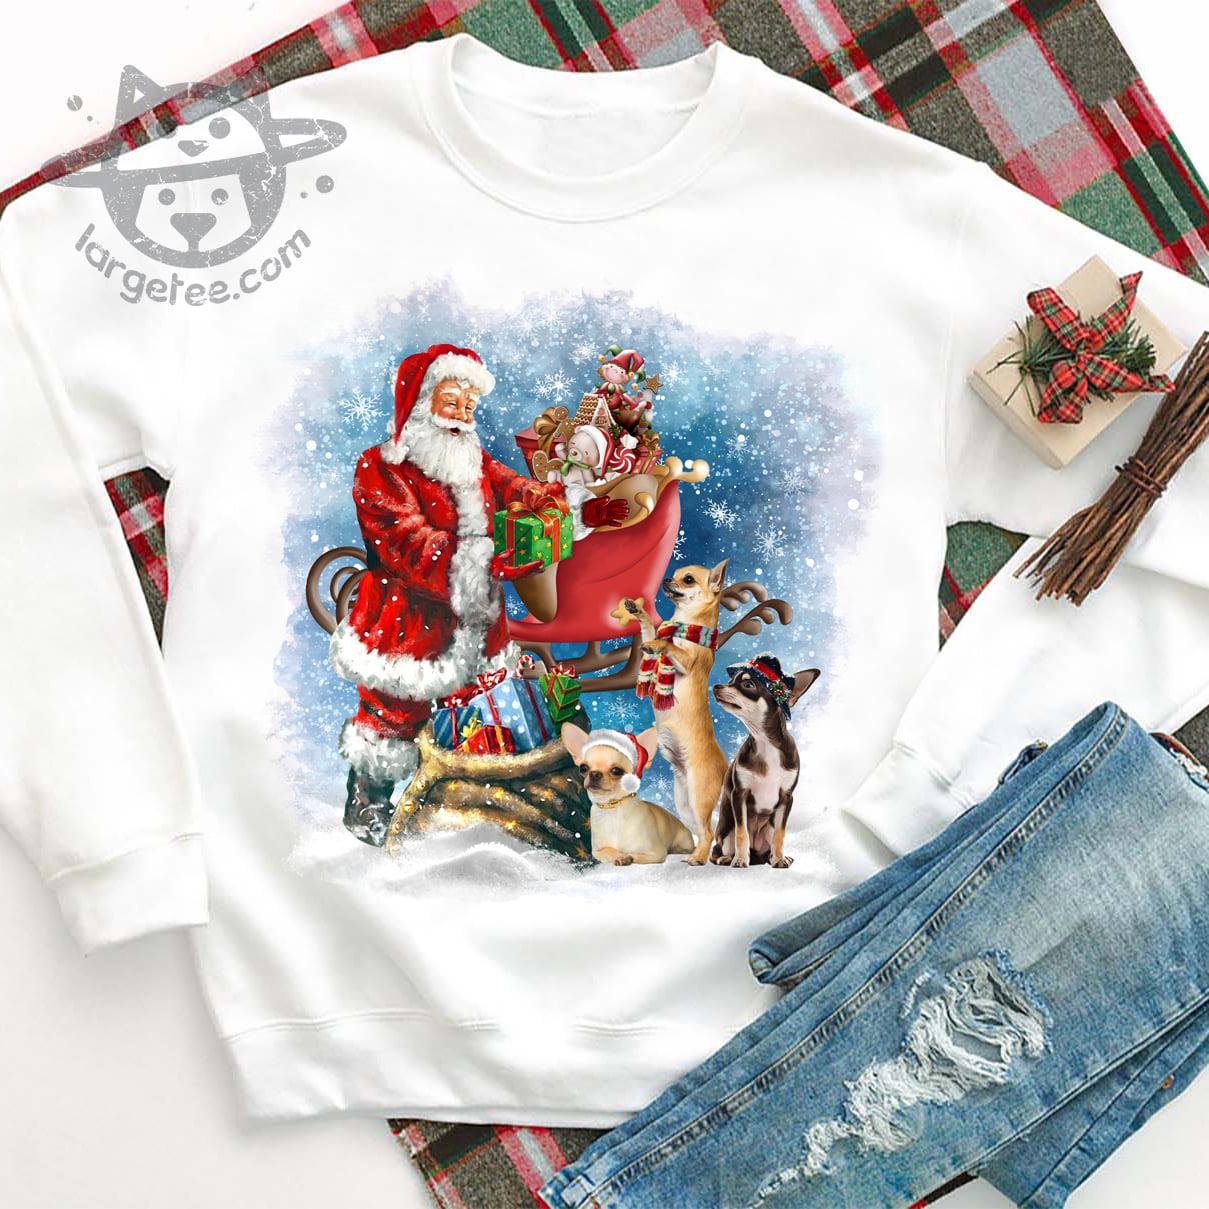 Santa Claus gives christmas gifts for Chihuahua - Chihuahua And Santa Claus, Christmas Gift